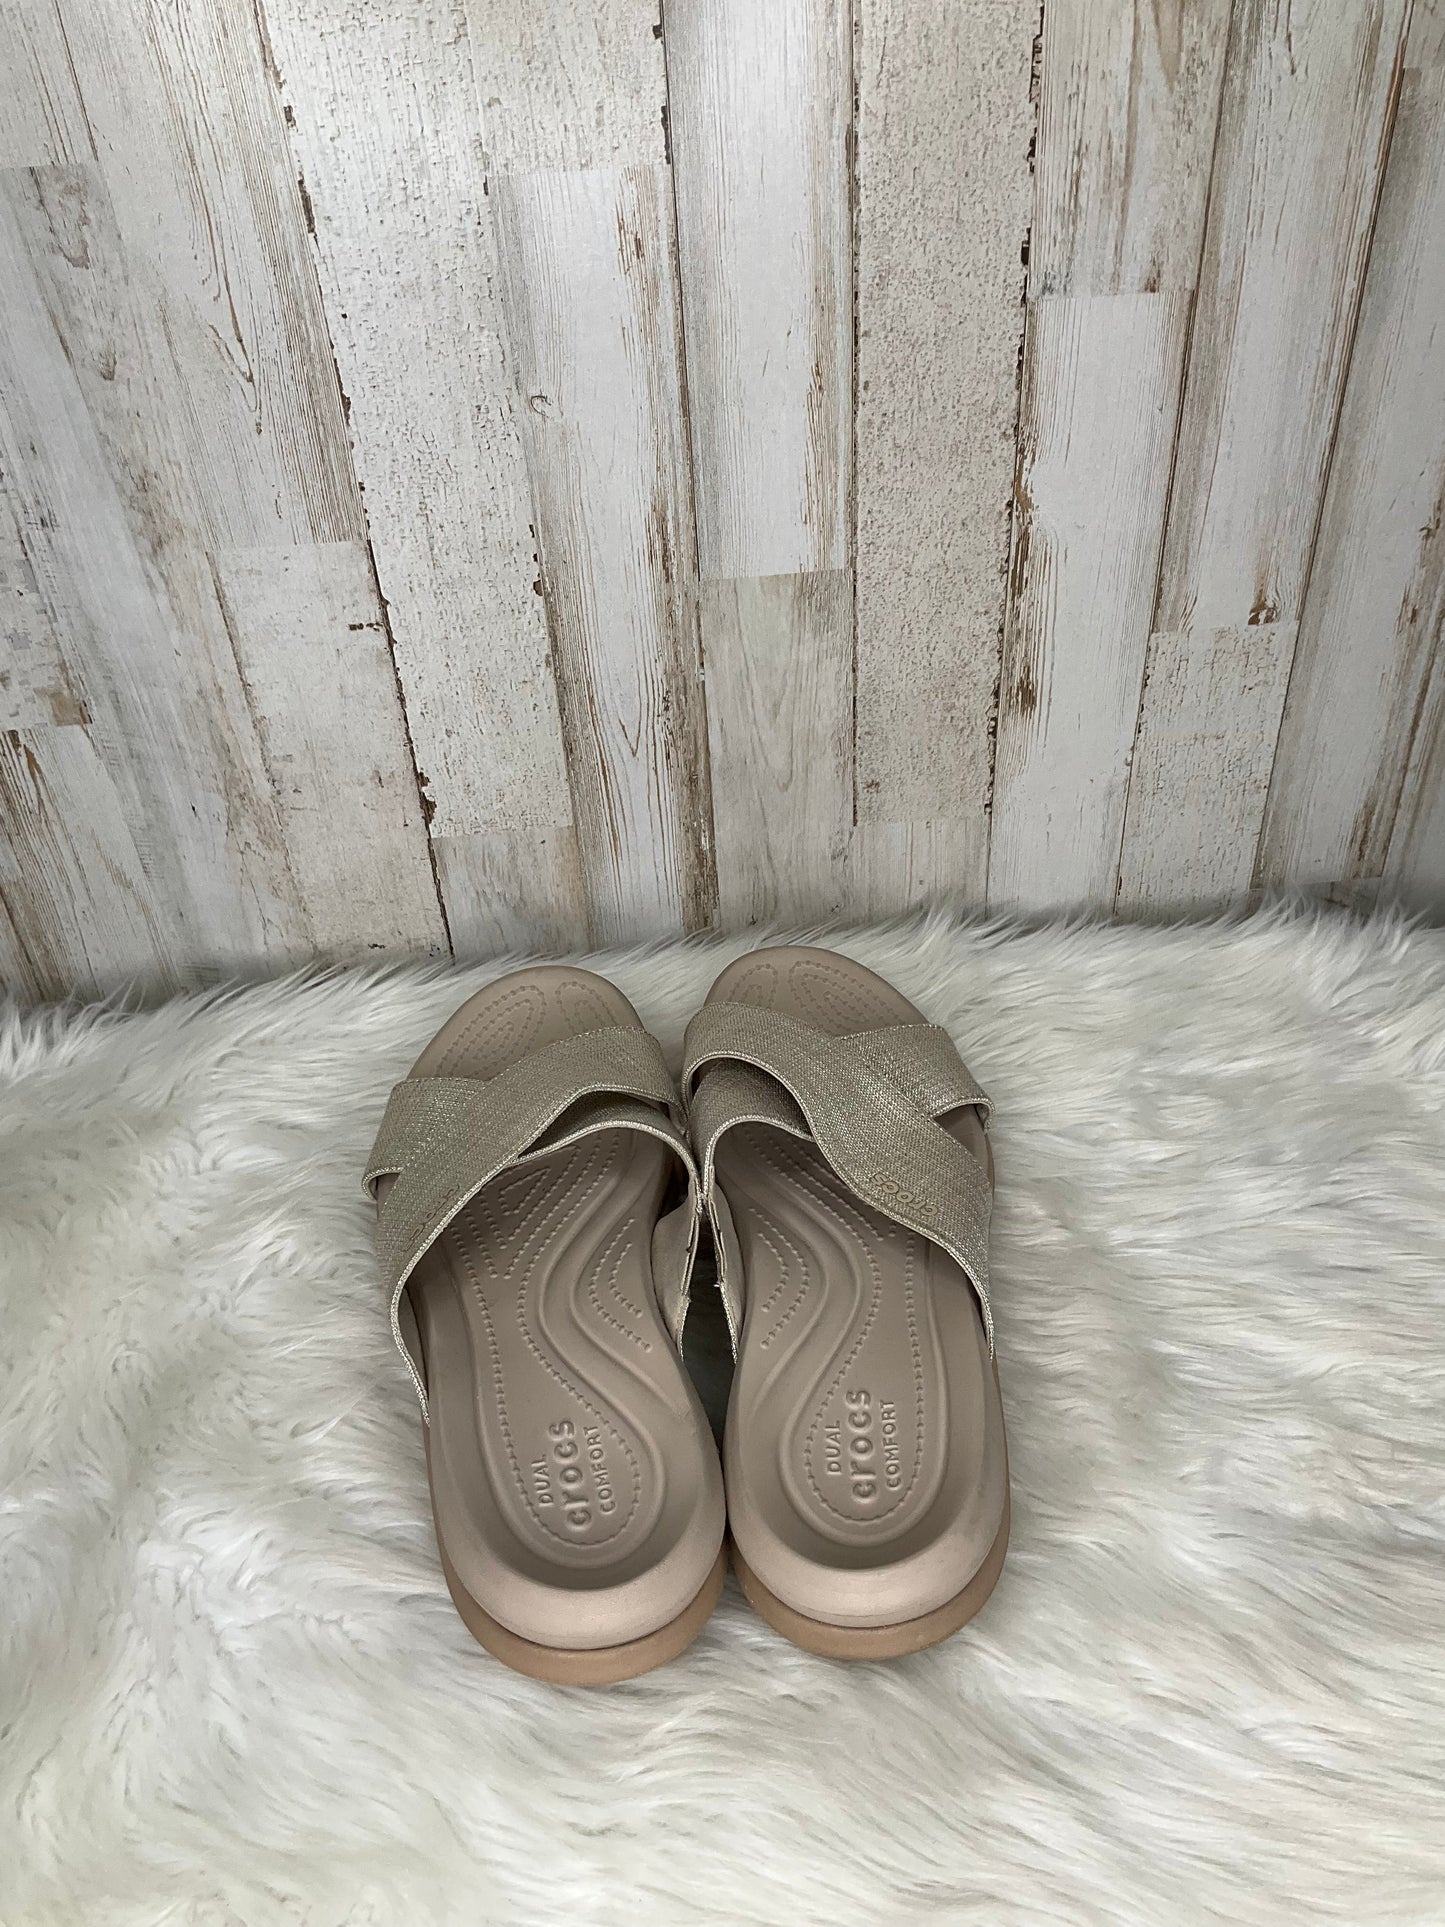 Silver Sandals Heels Platform Crocs, Size 9